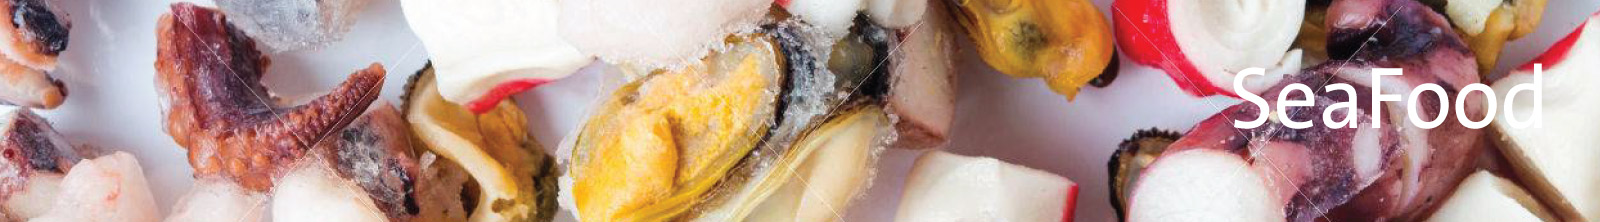 seafood inside banner